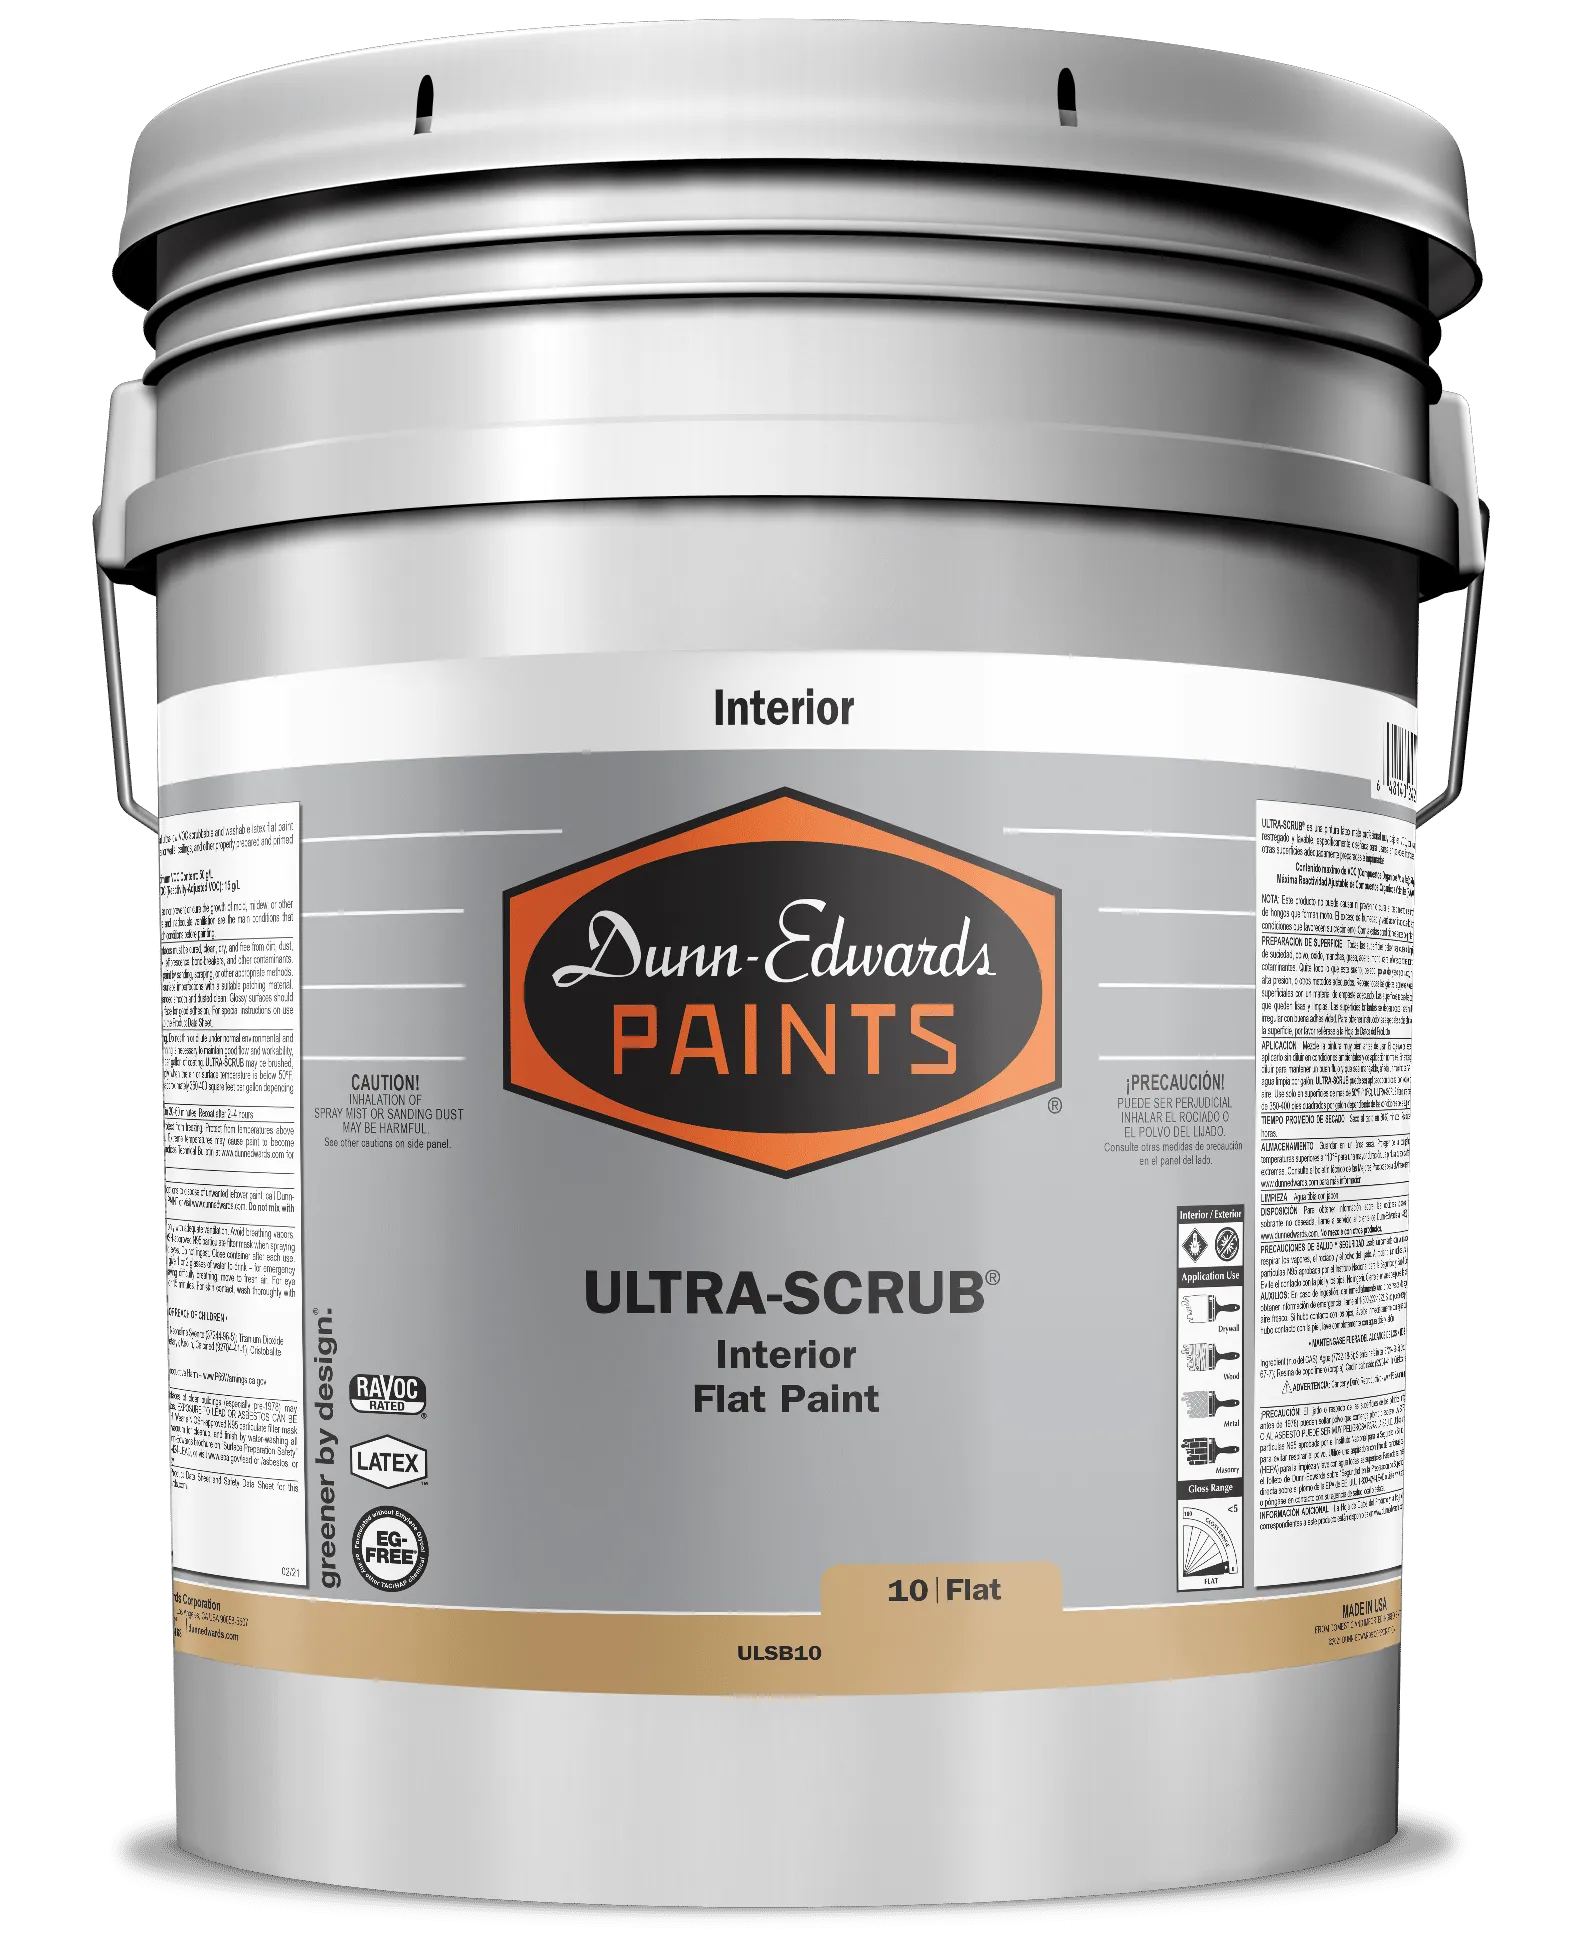 ULTRA-SCRUB Interior Flat Paint Can